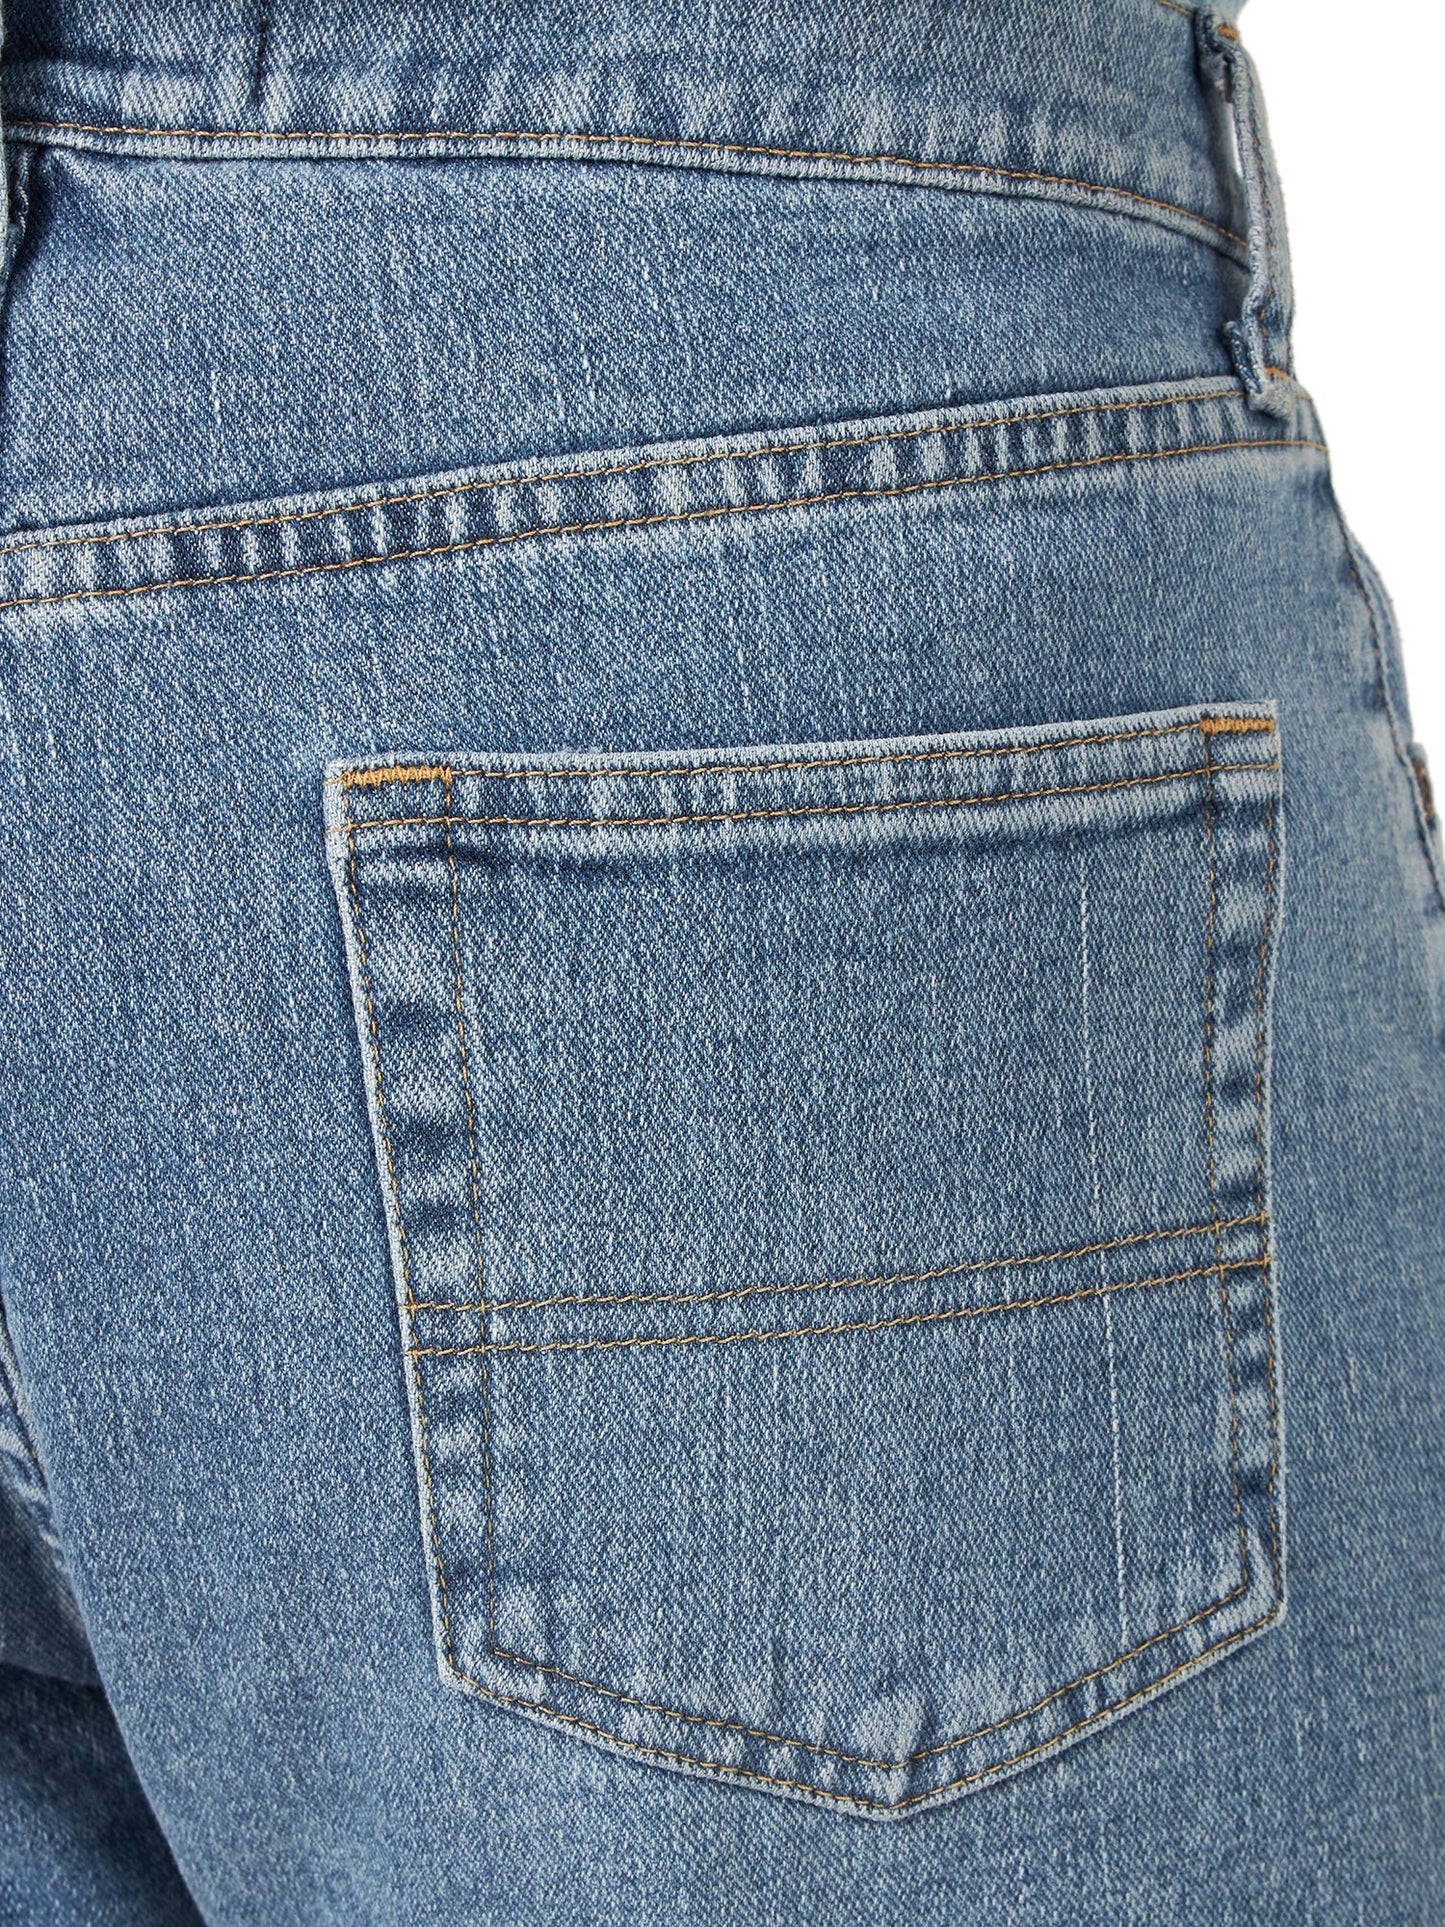 Wrangler Authentics Men's Classic Relaxed Fit Five Pocket Jean Short, Light Wash Flex, 30